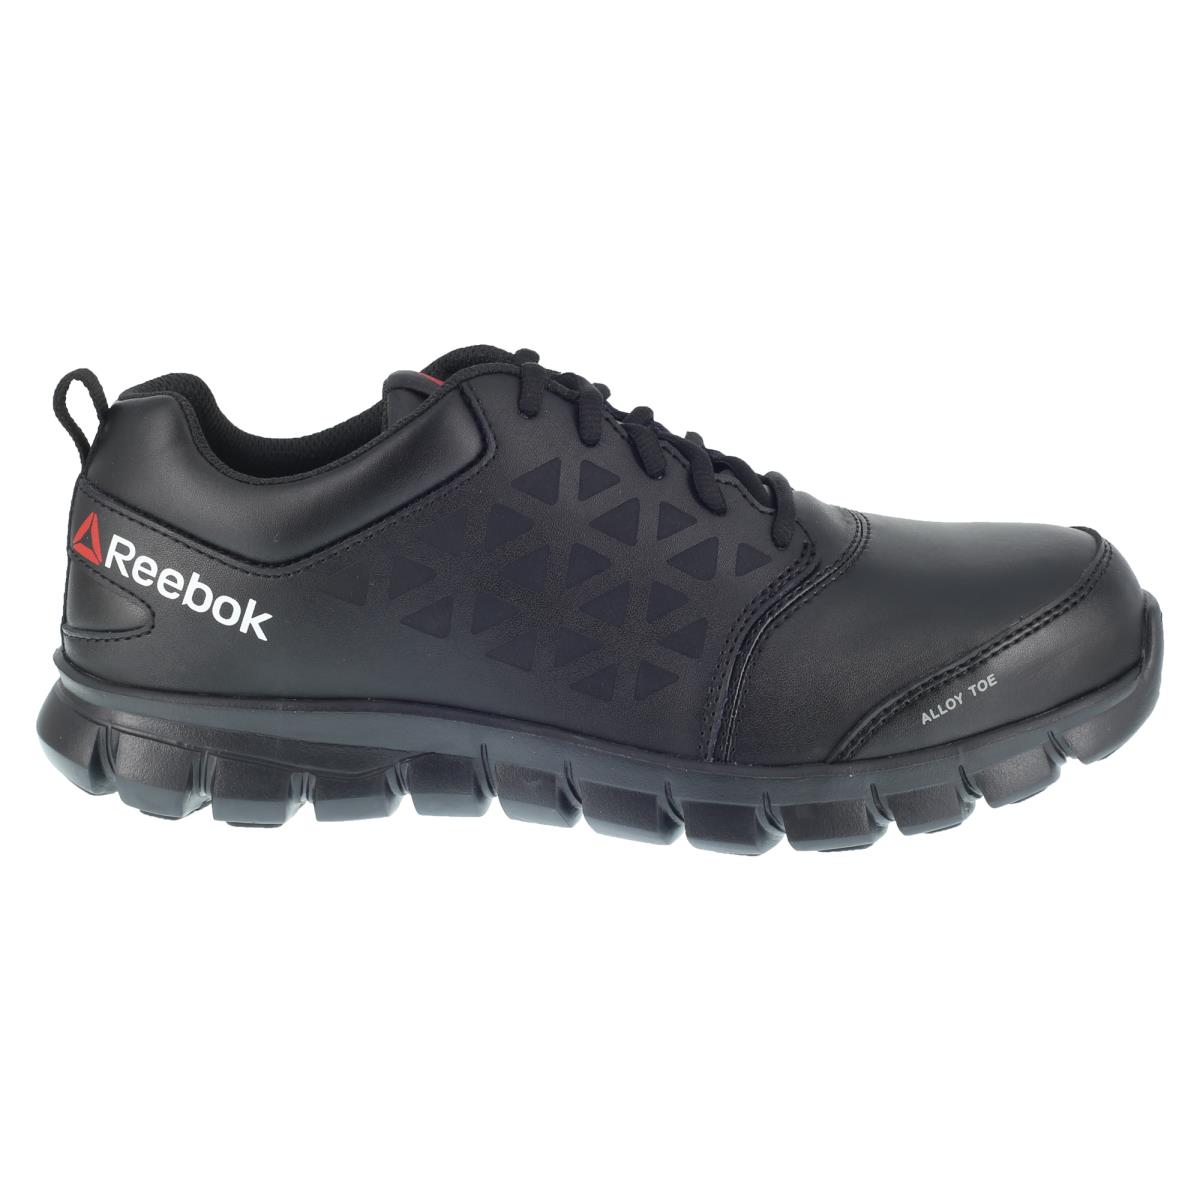 Reebok Mens Black Leather Work Shoes Sublite Oxford M